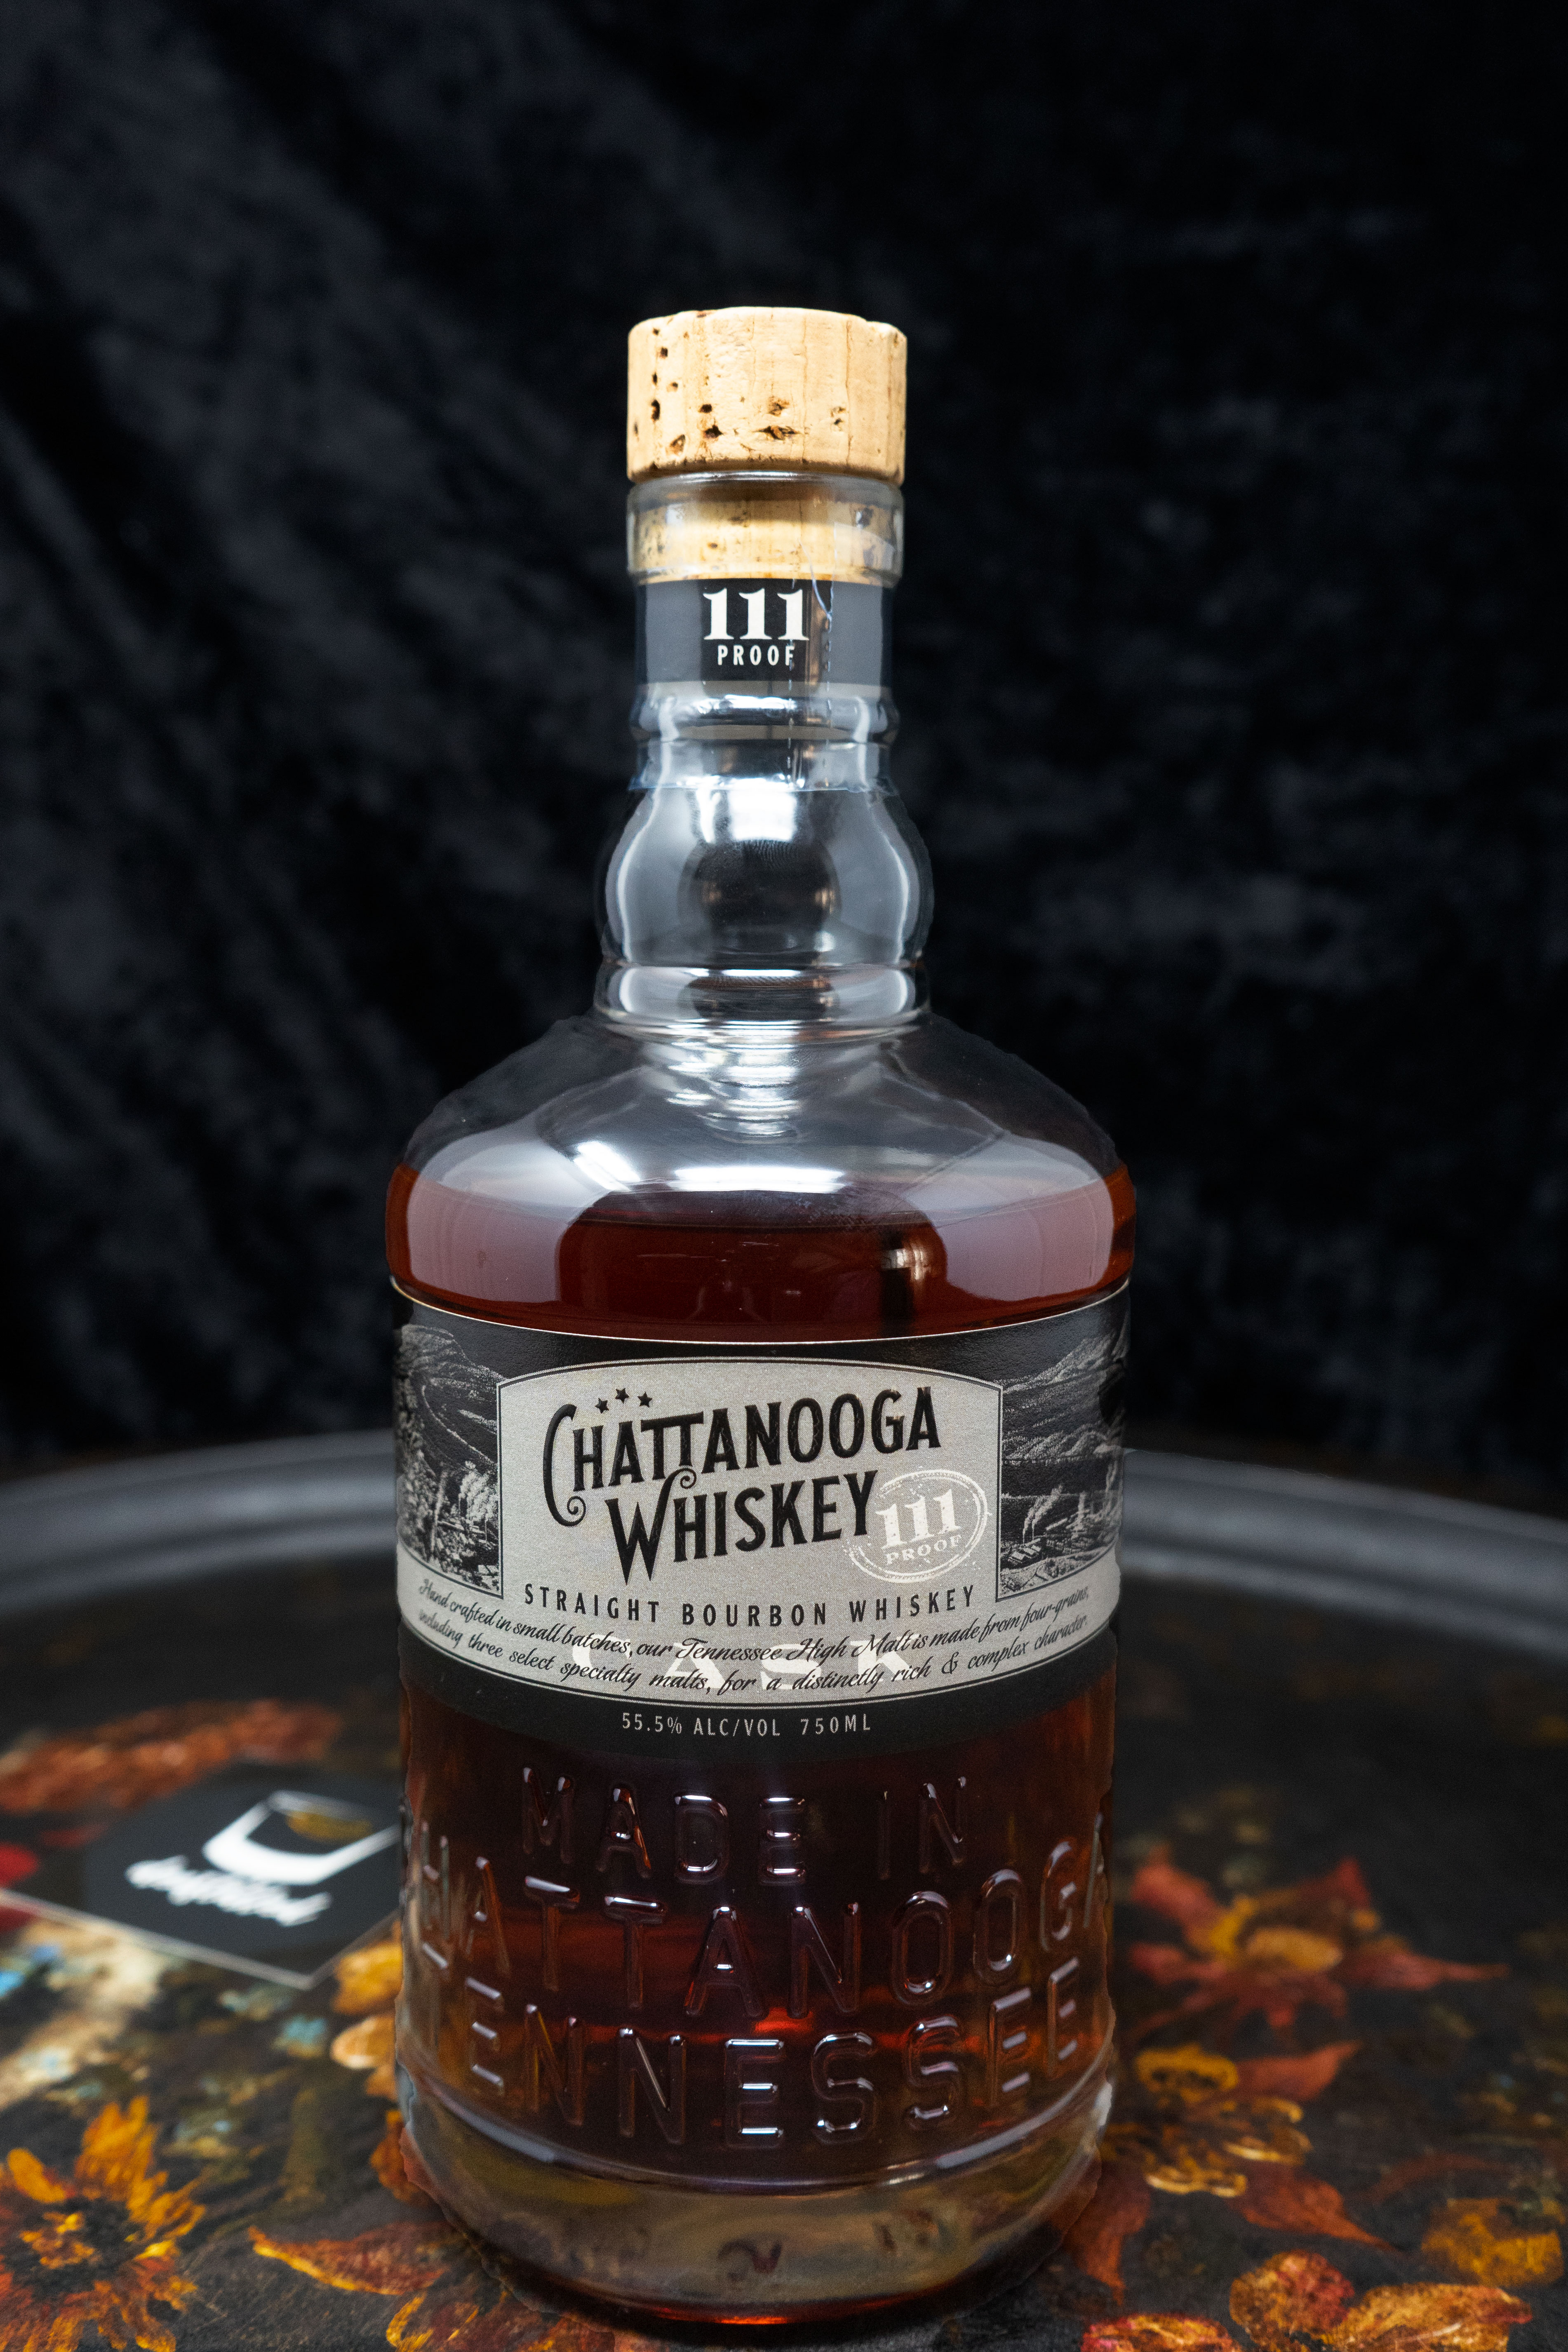 distributor for chattanooga whiskey